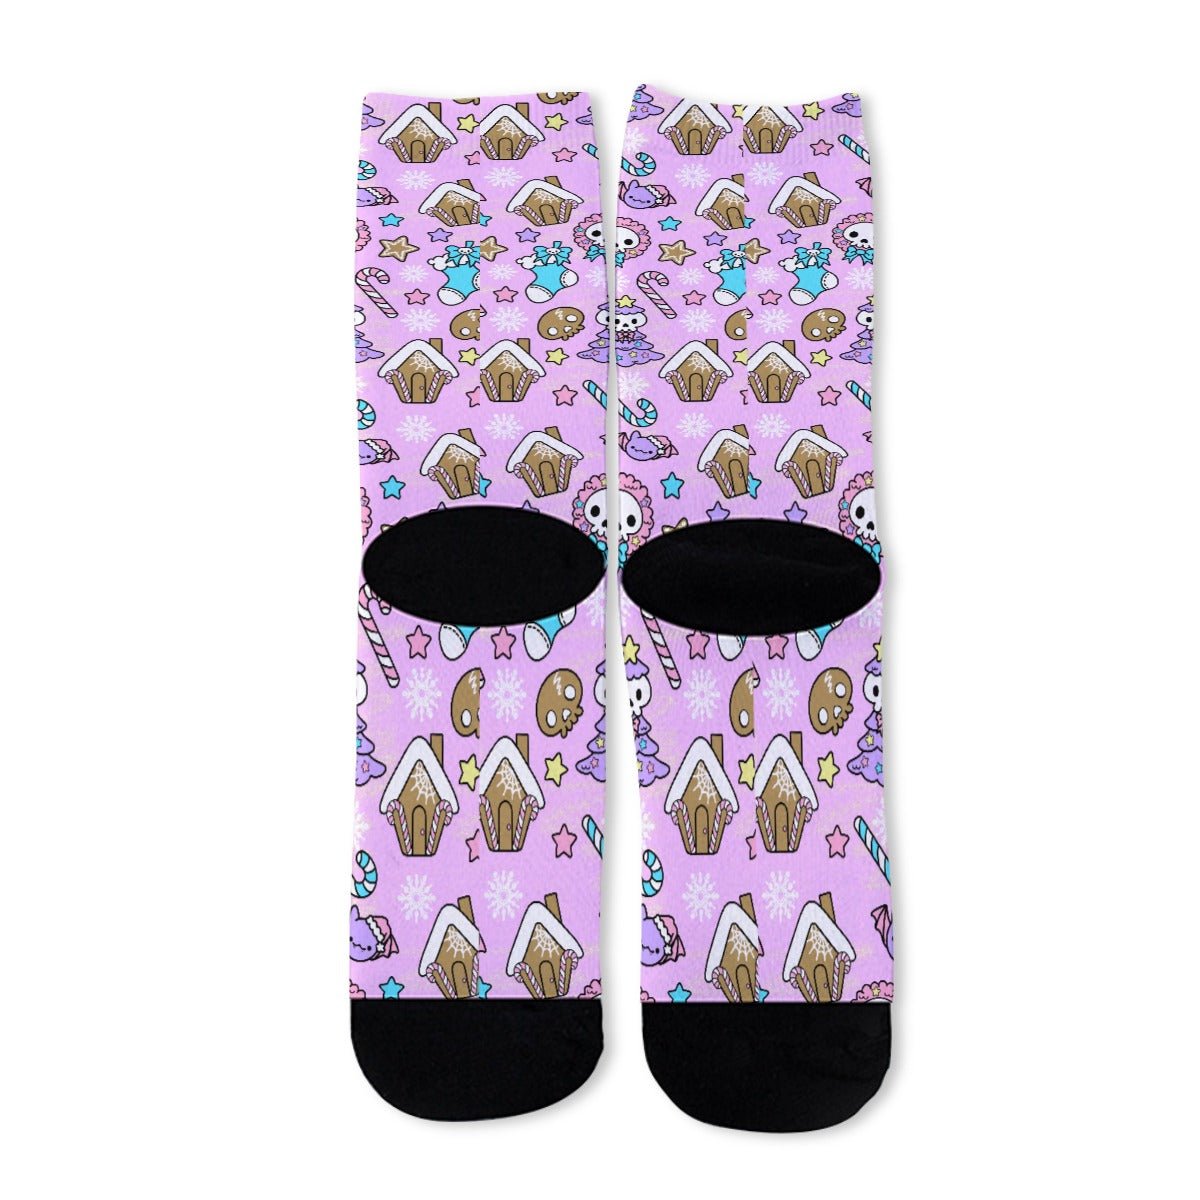 Unisex Long Socks - Creepy Kawaii - Pink - Festive Style